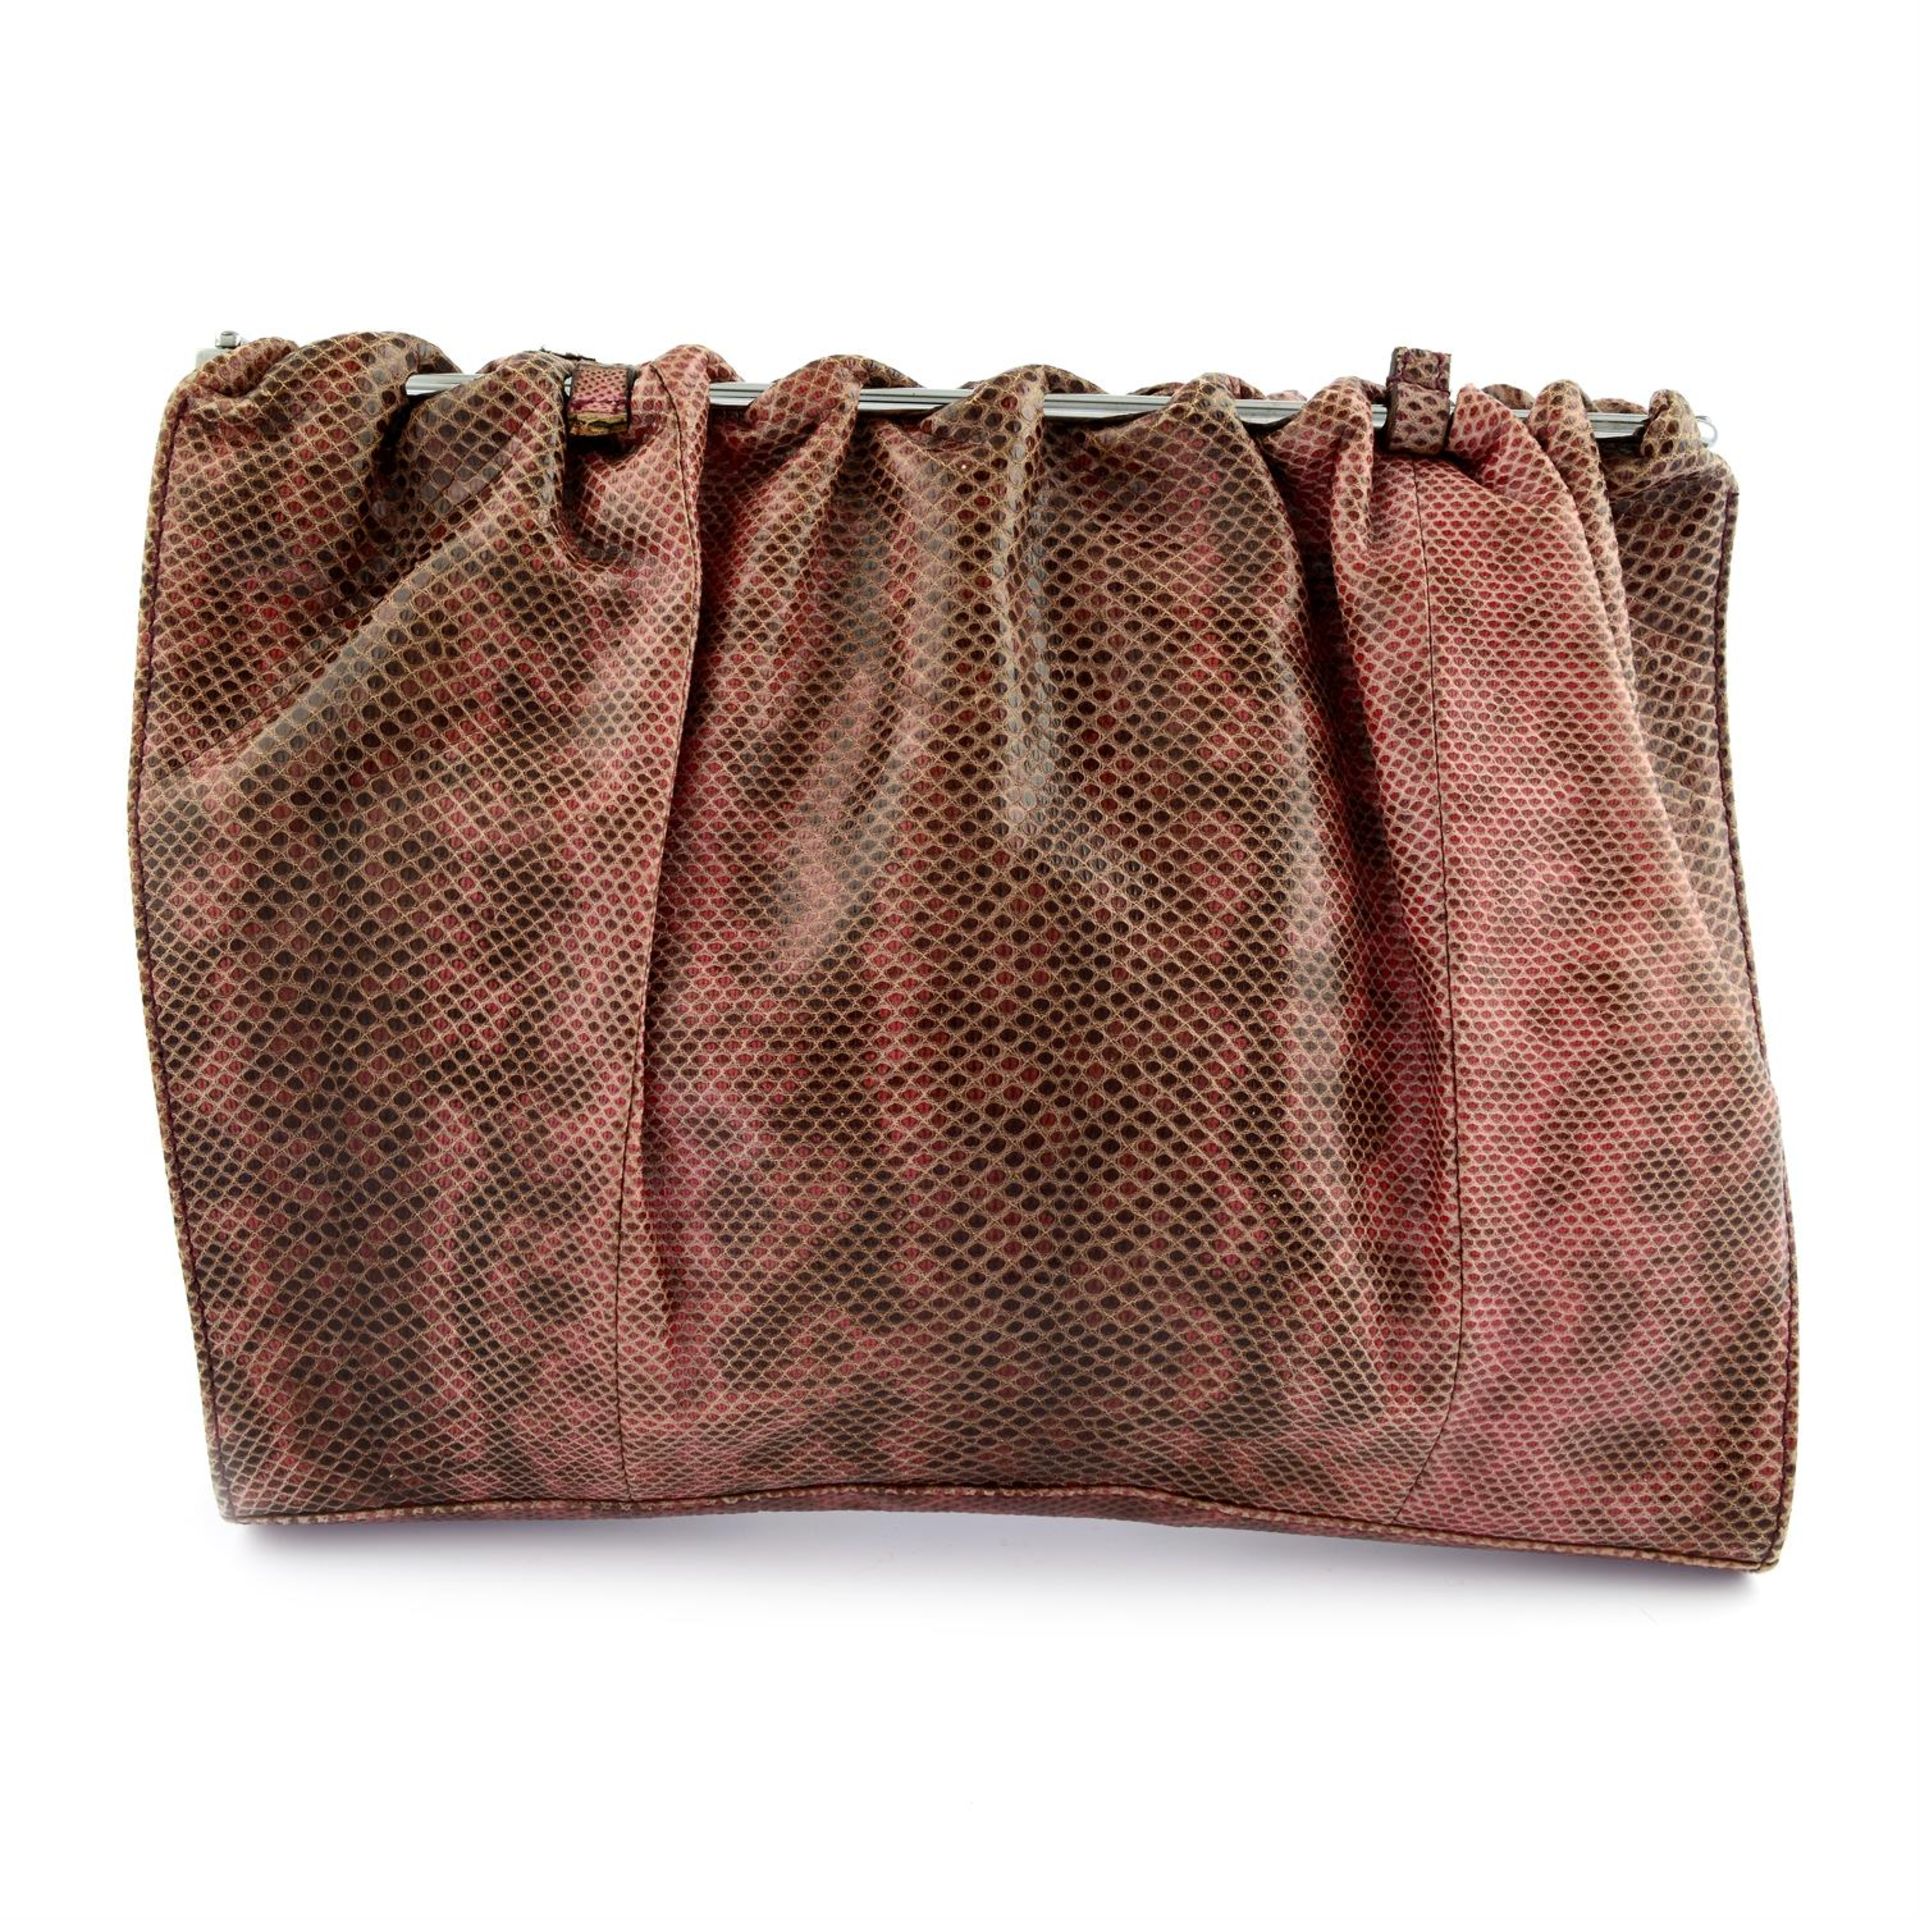 GUCCI - a pink snakeskin bag.